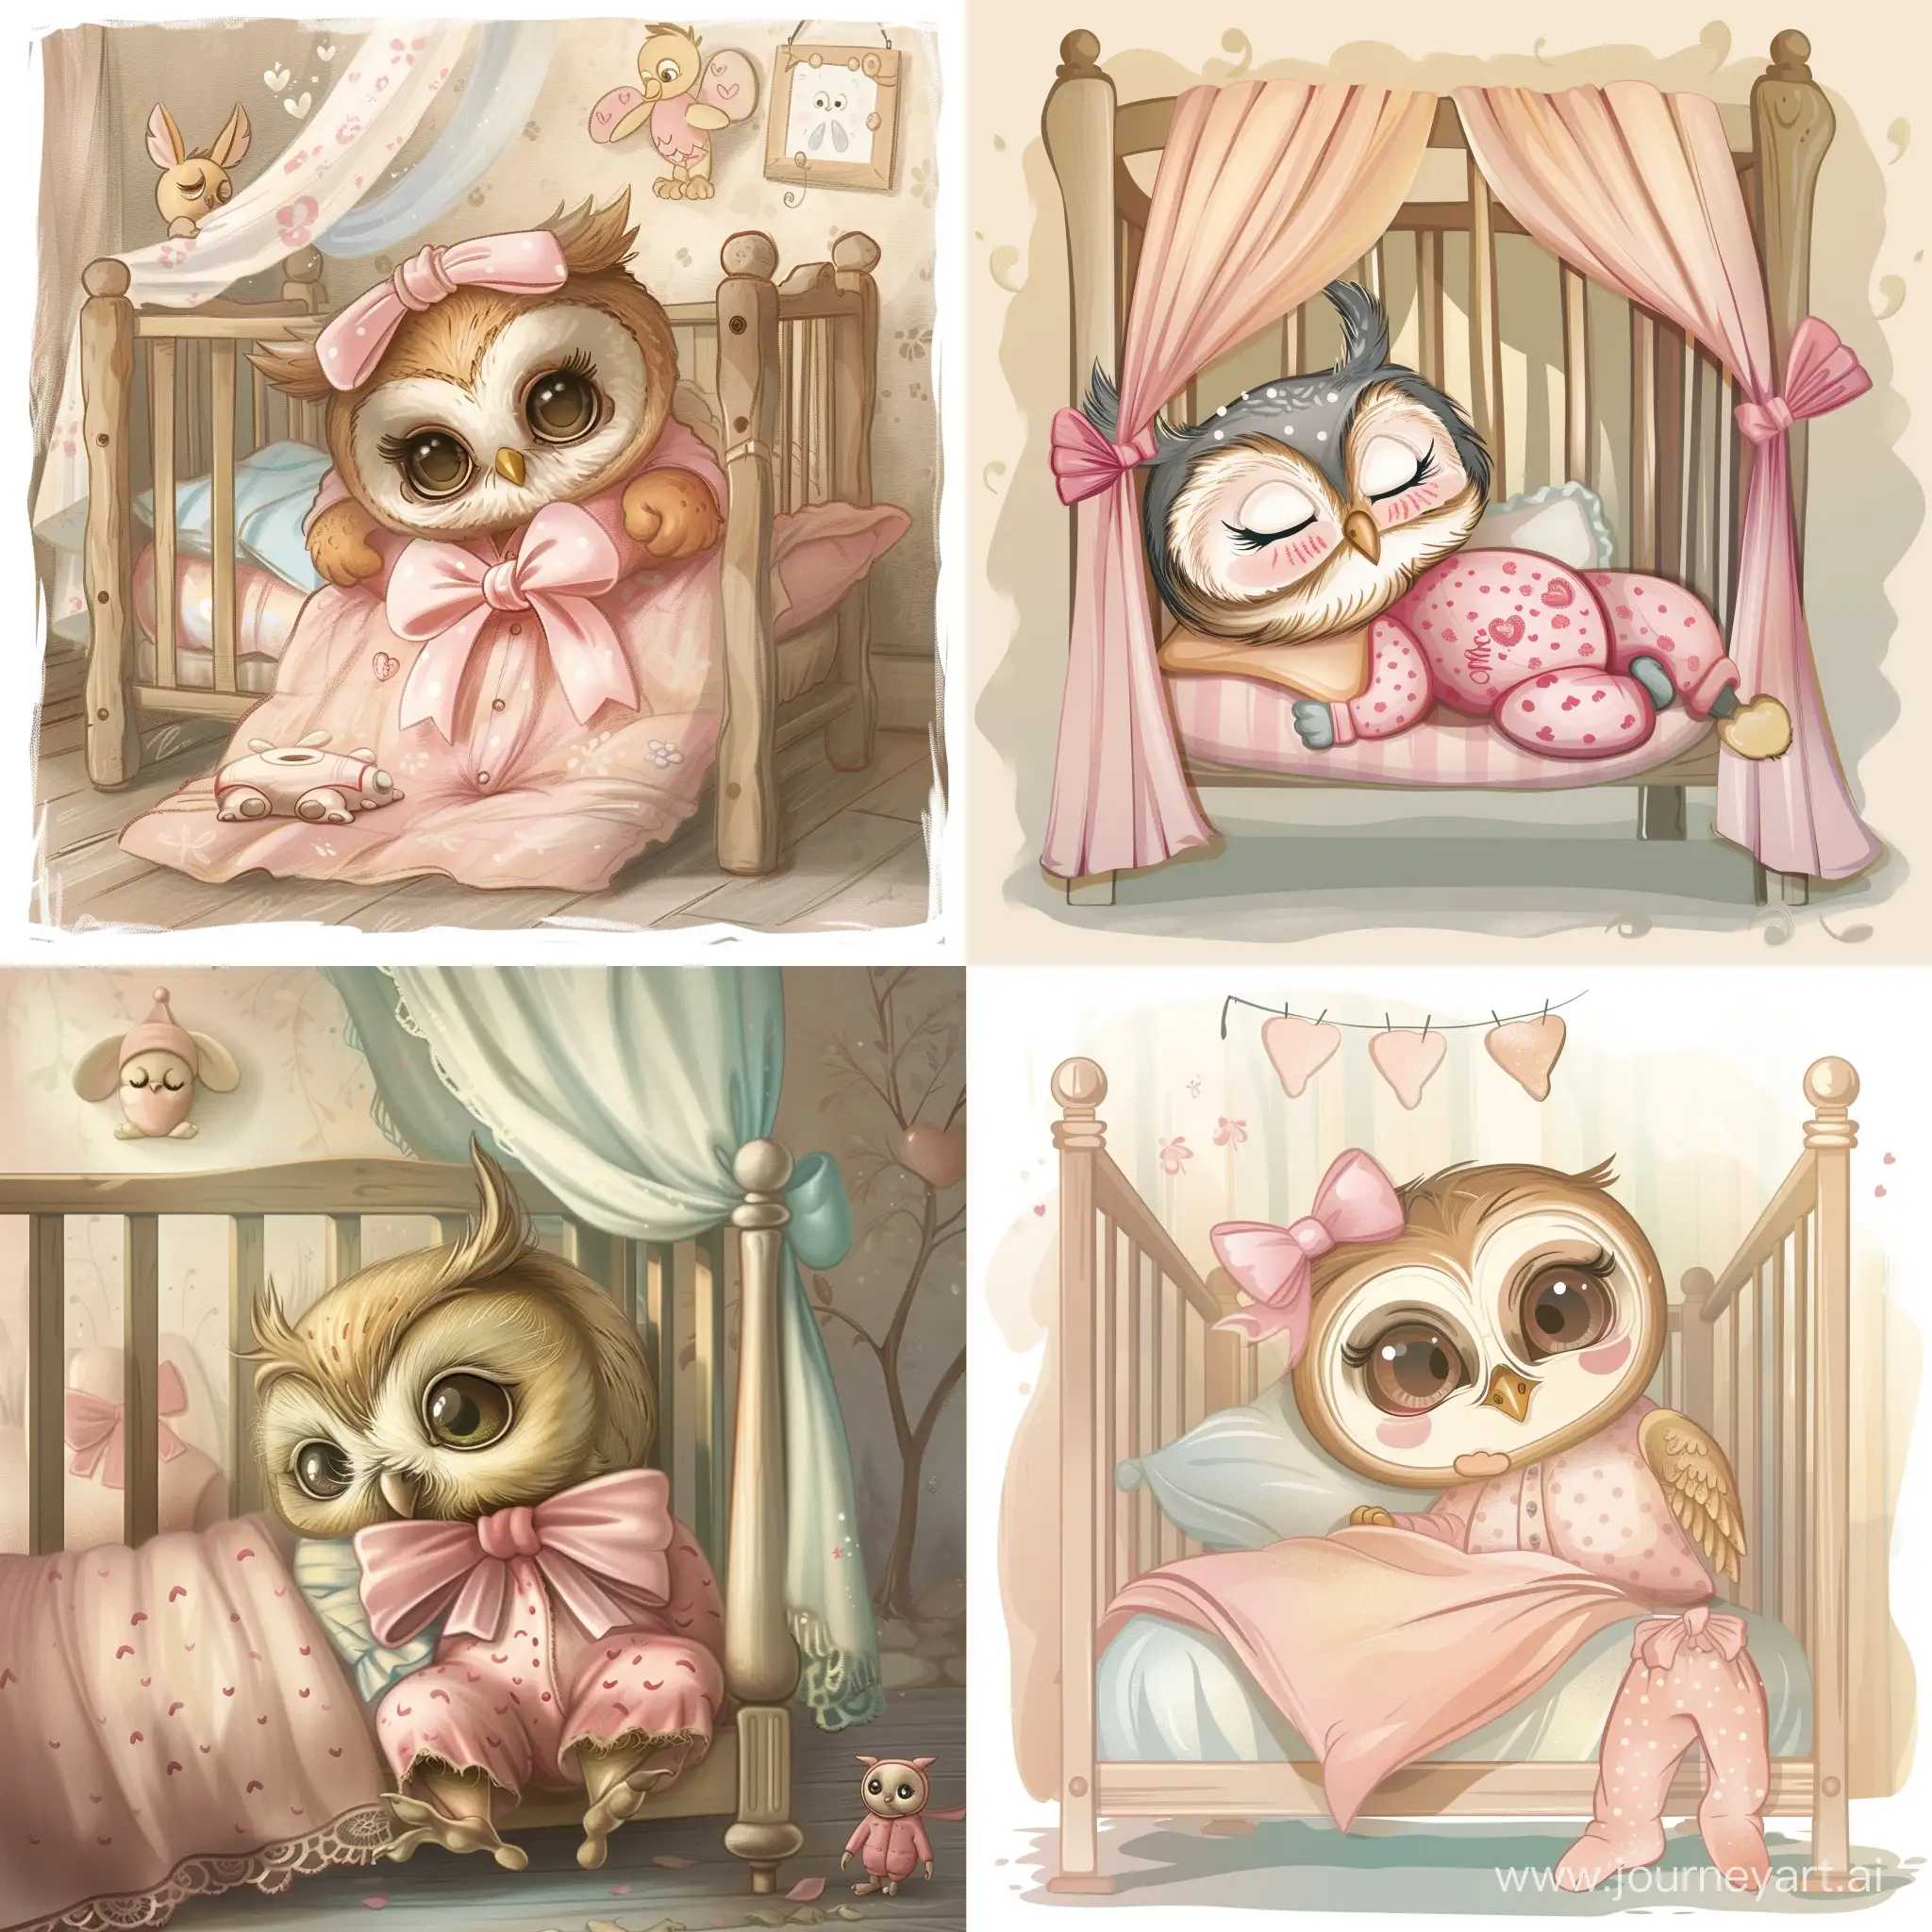 Adorable-Owl-Sleeping-in-Pink-Pajamas-Next-to-Crib-Sweet-Dreams-Scene